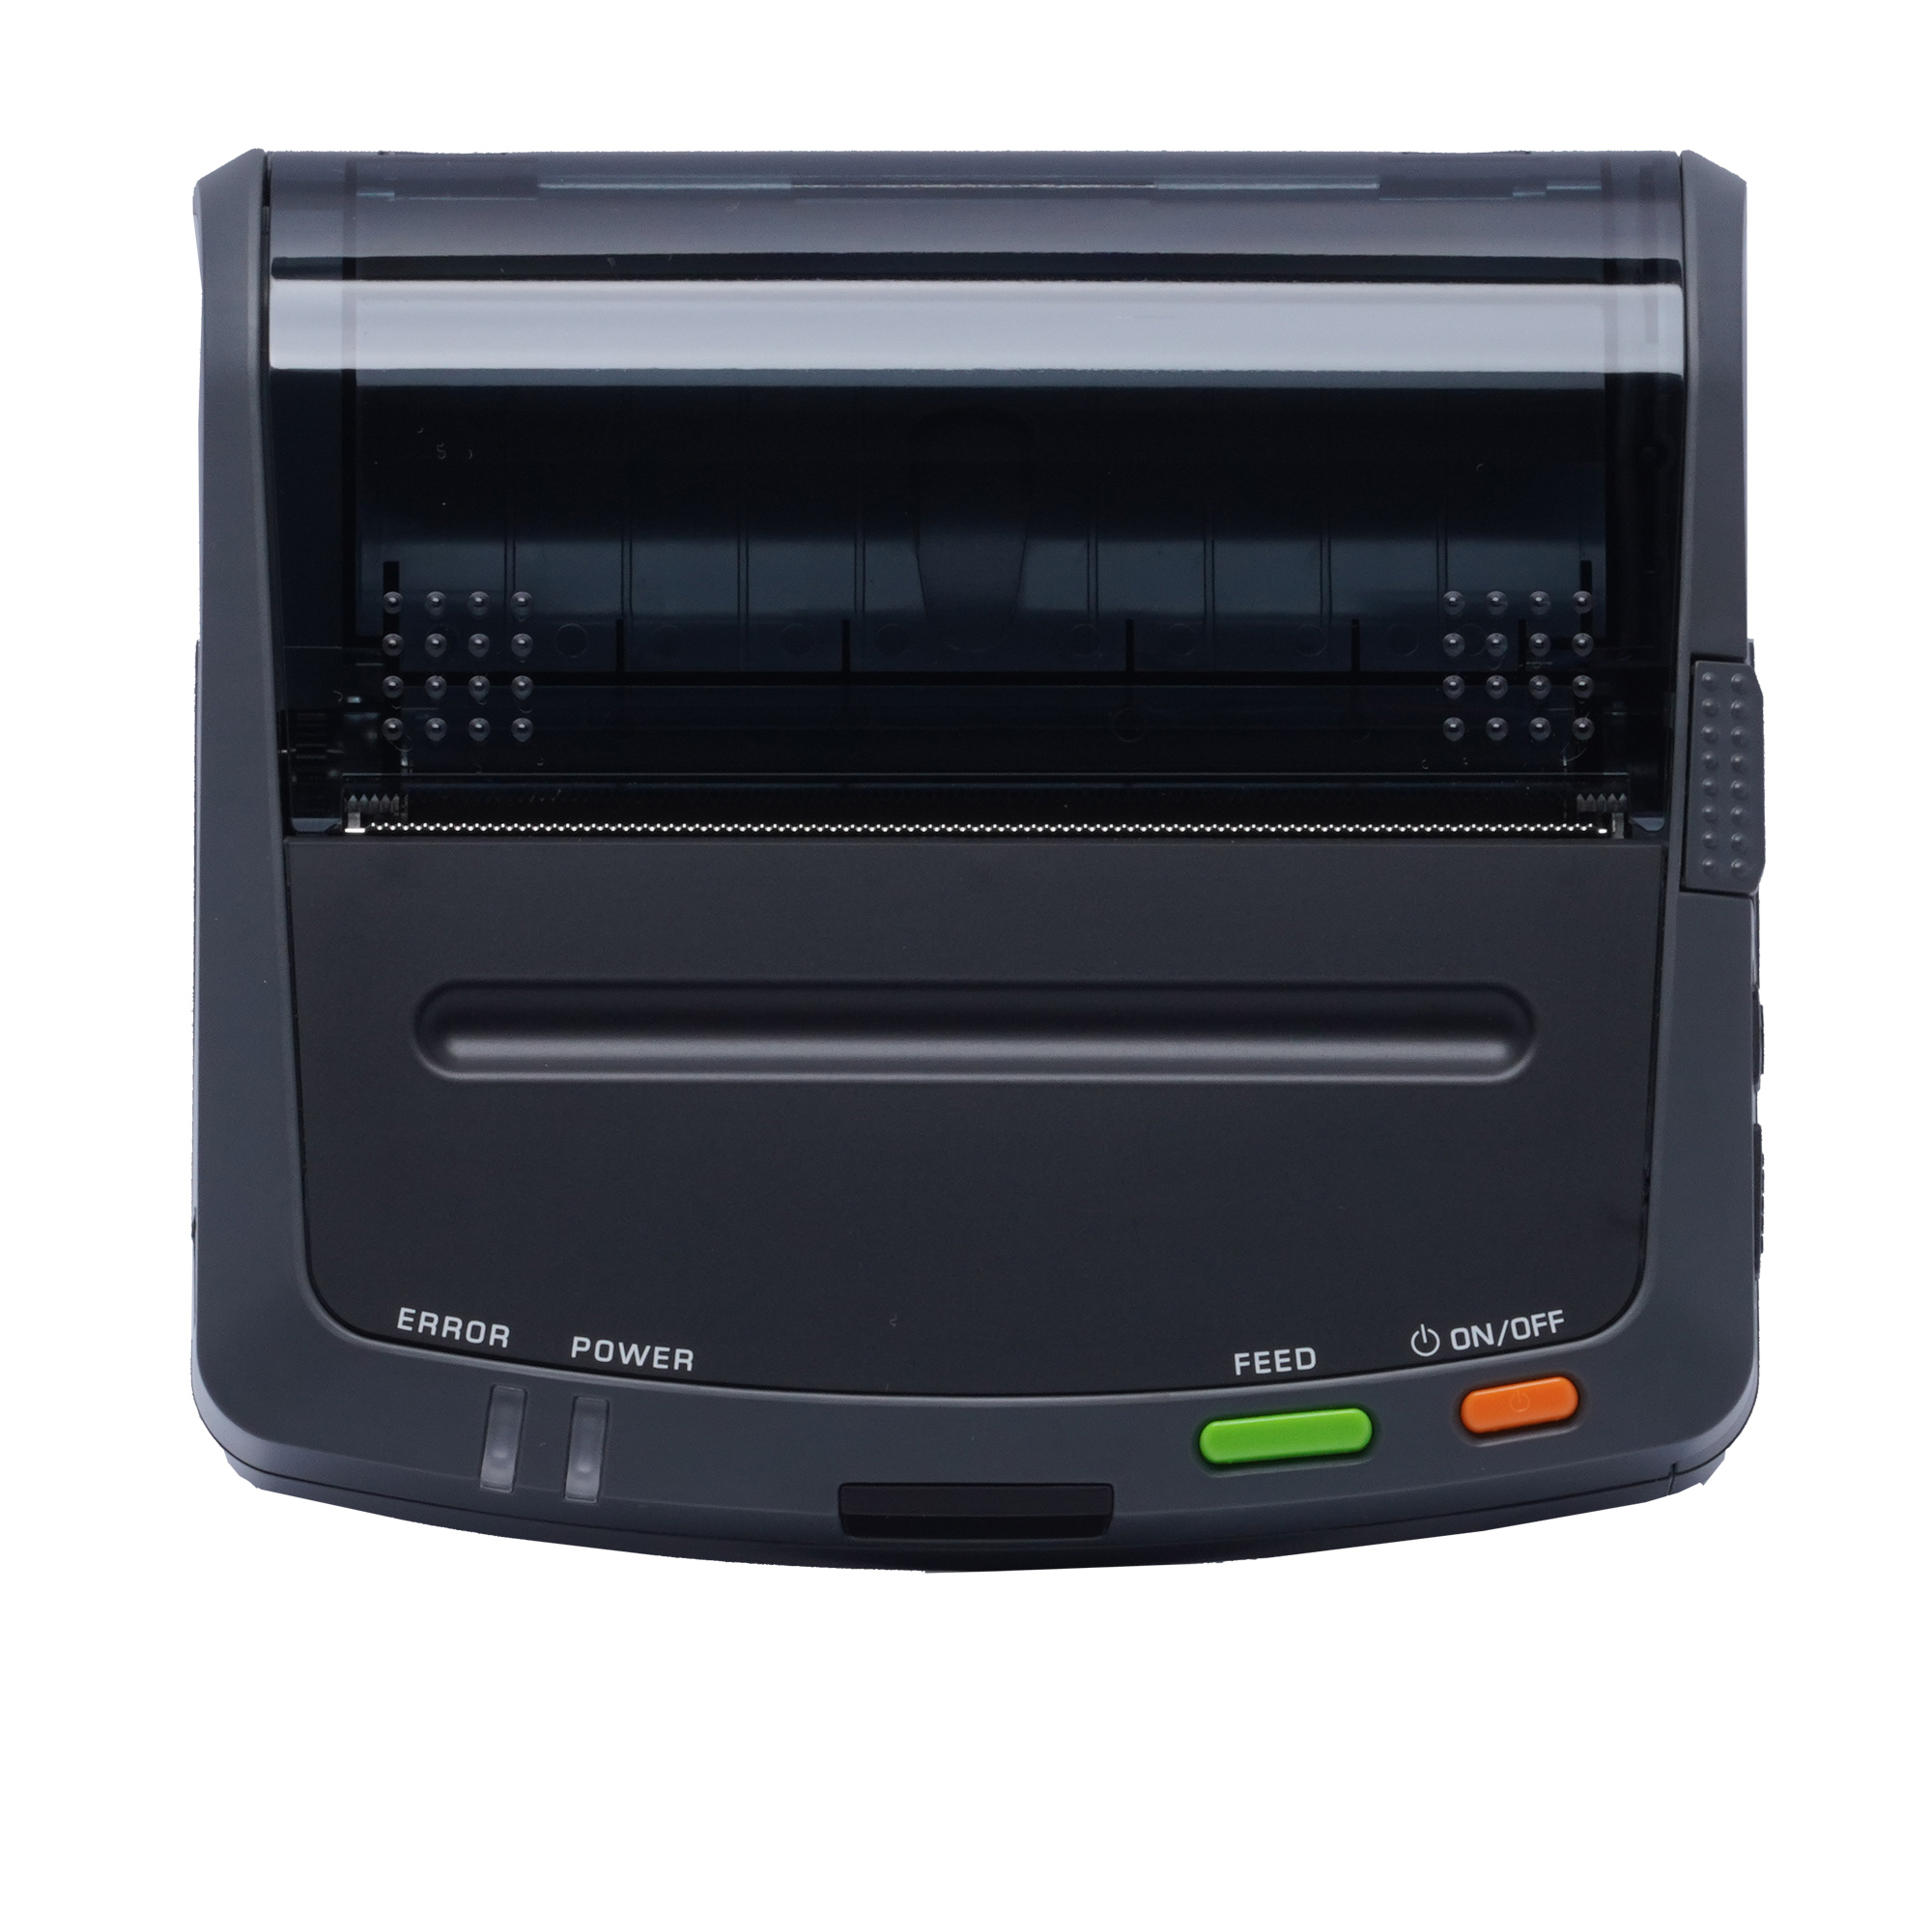 DPU-S Series Mobile Printers - Thermal Printers | Seiko 